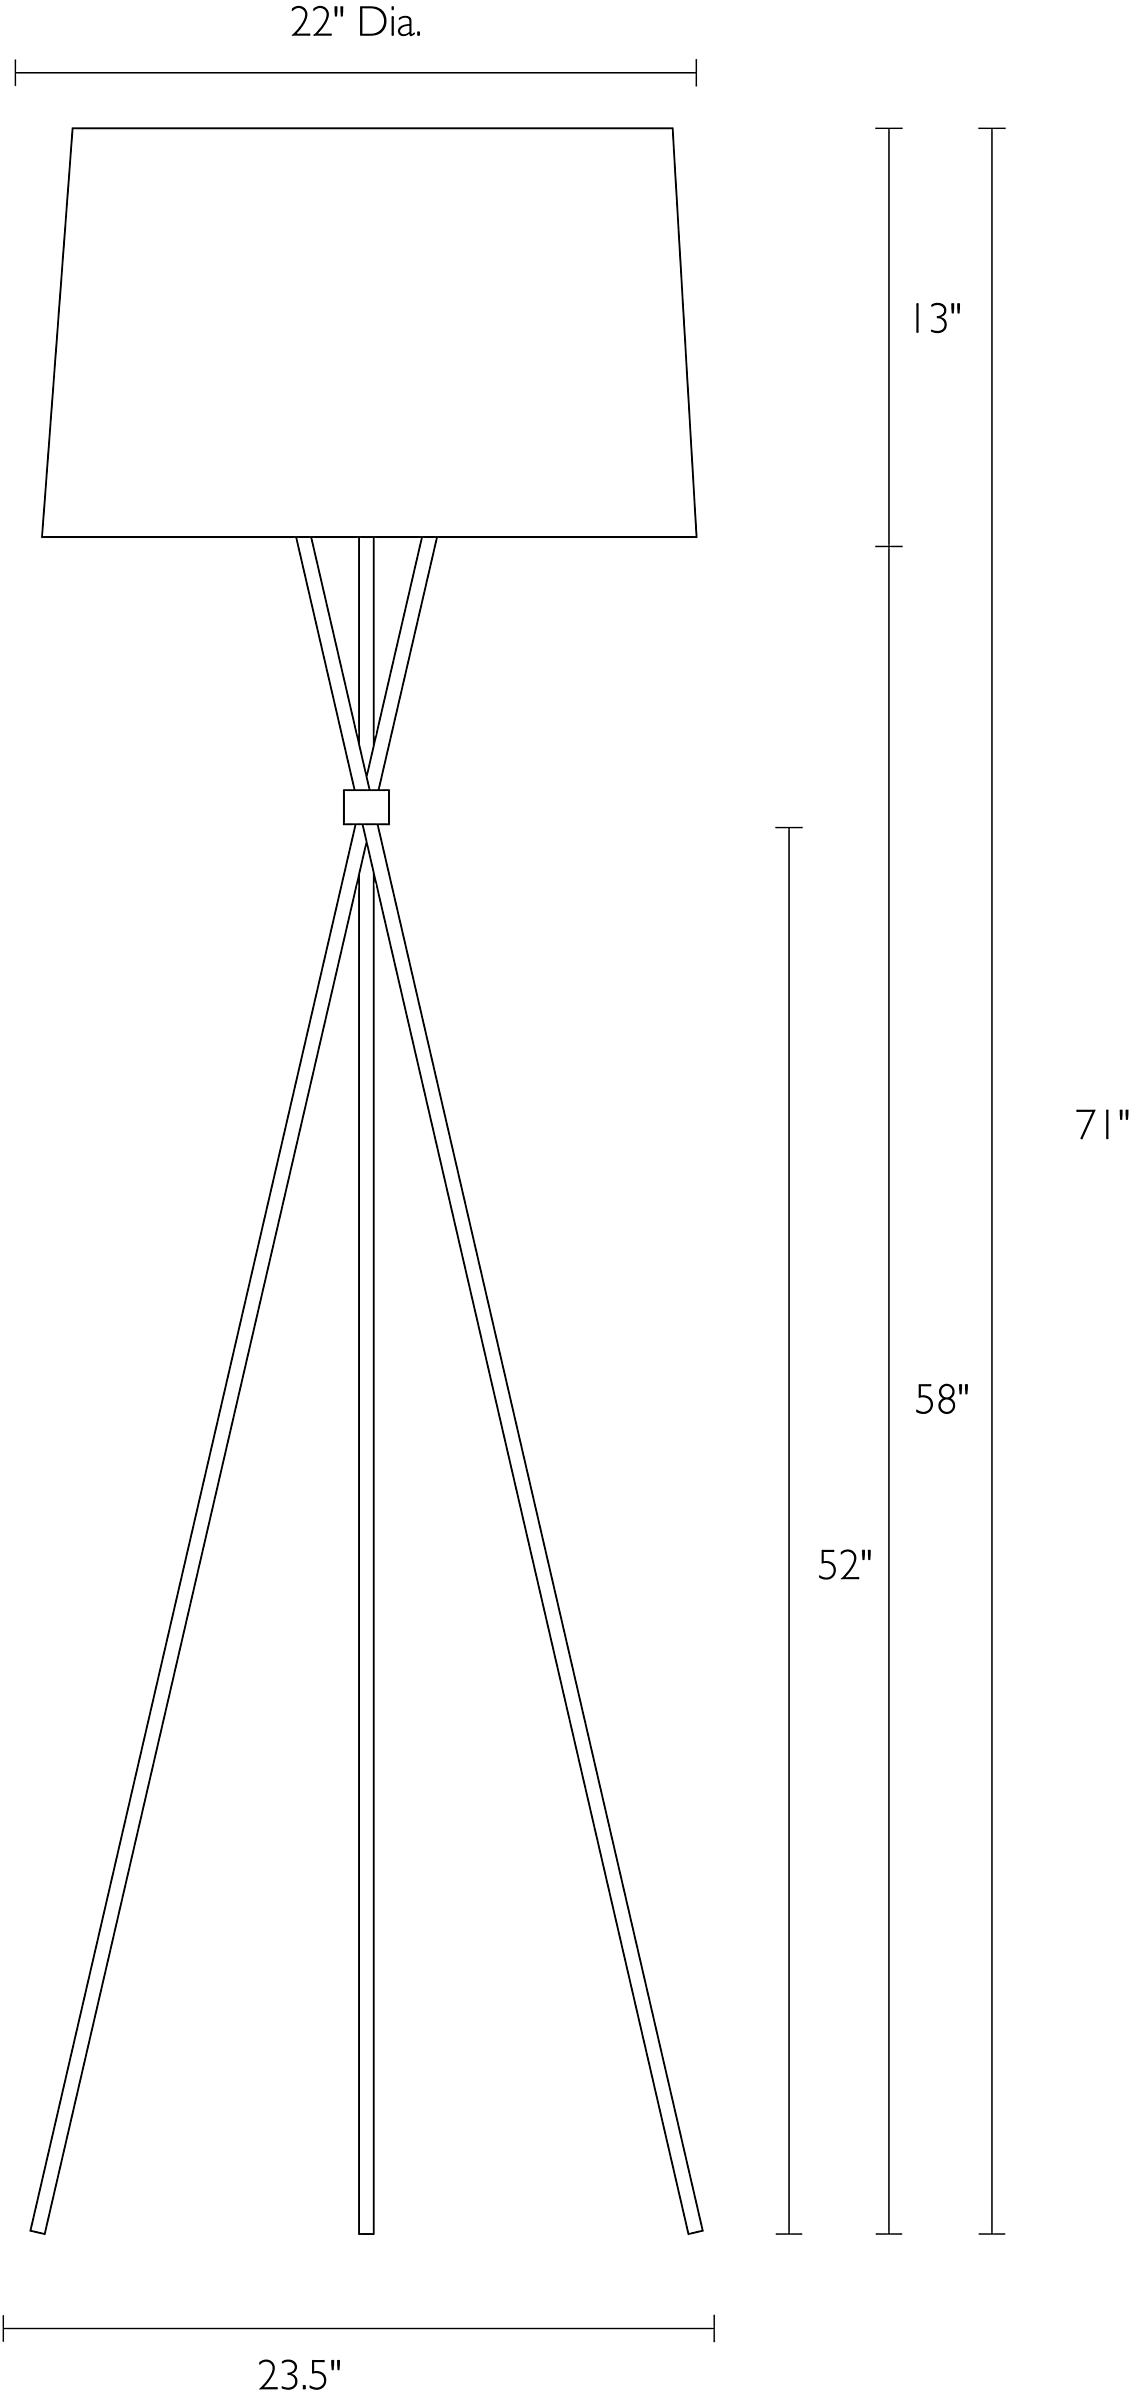 Detail of Tri-Plex floor lamp dimension drawing.